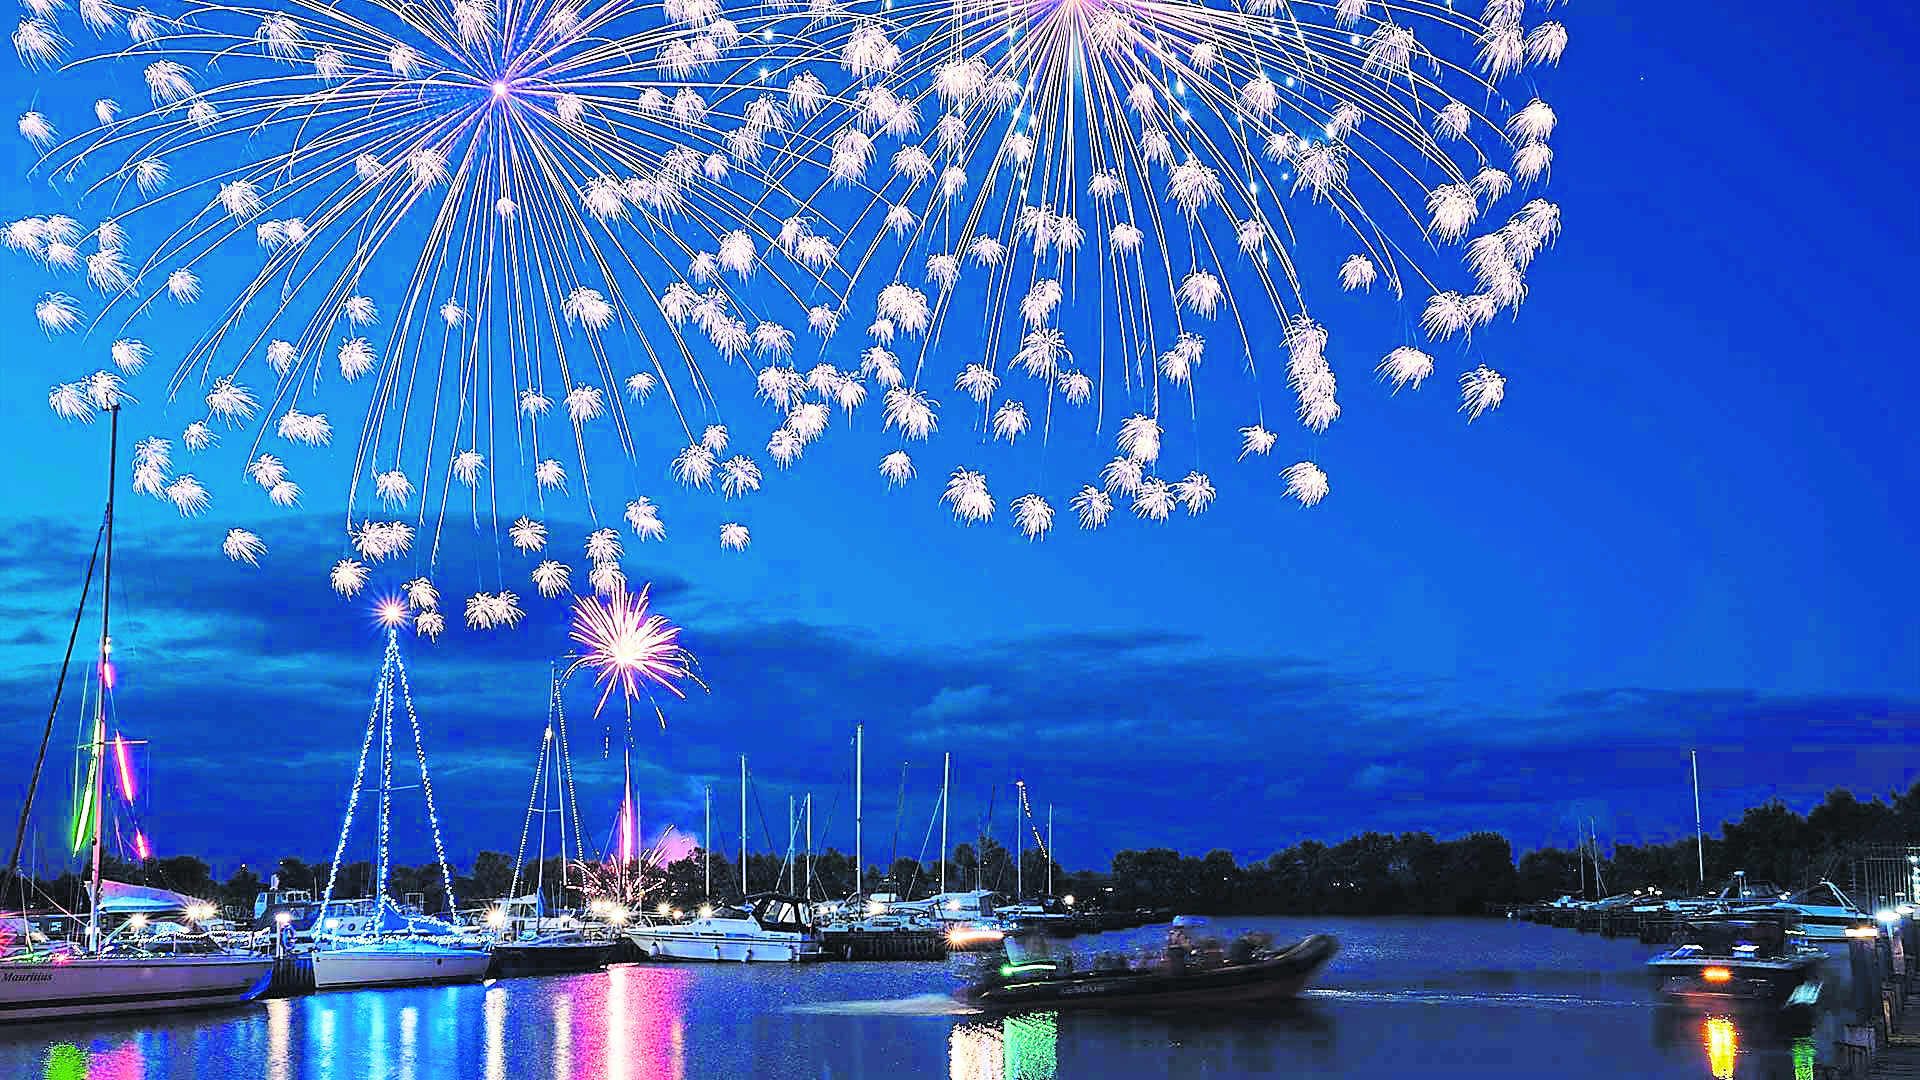 Fireworks spectacular to light up revamped Ballyronan marina